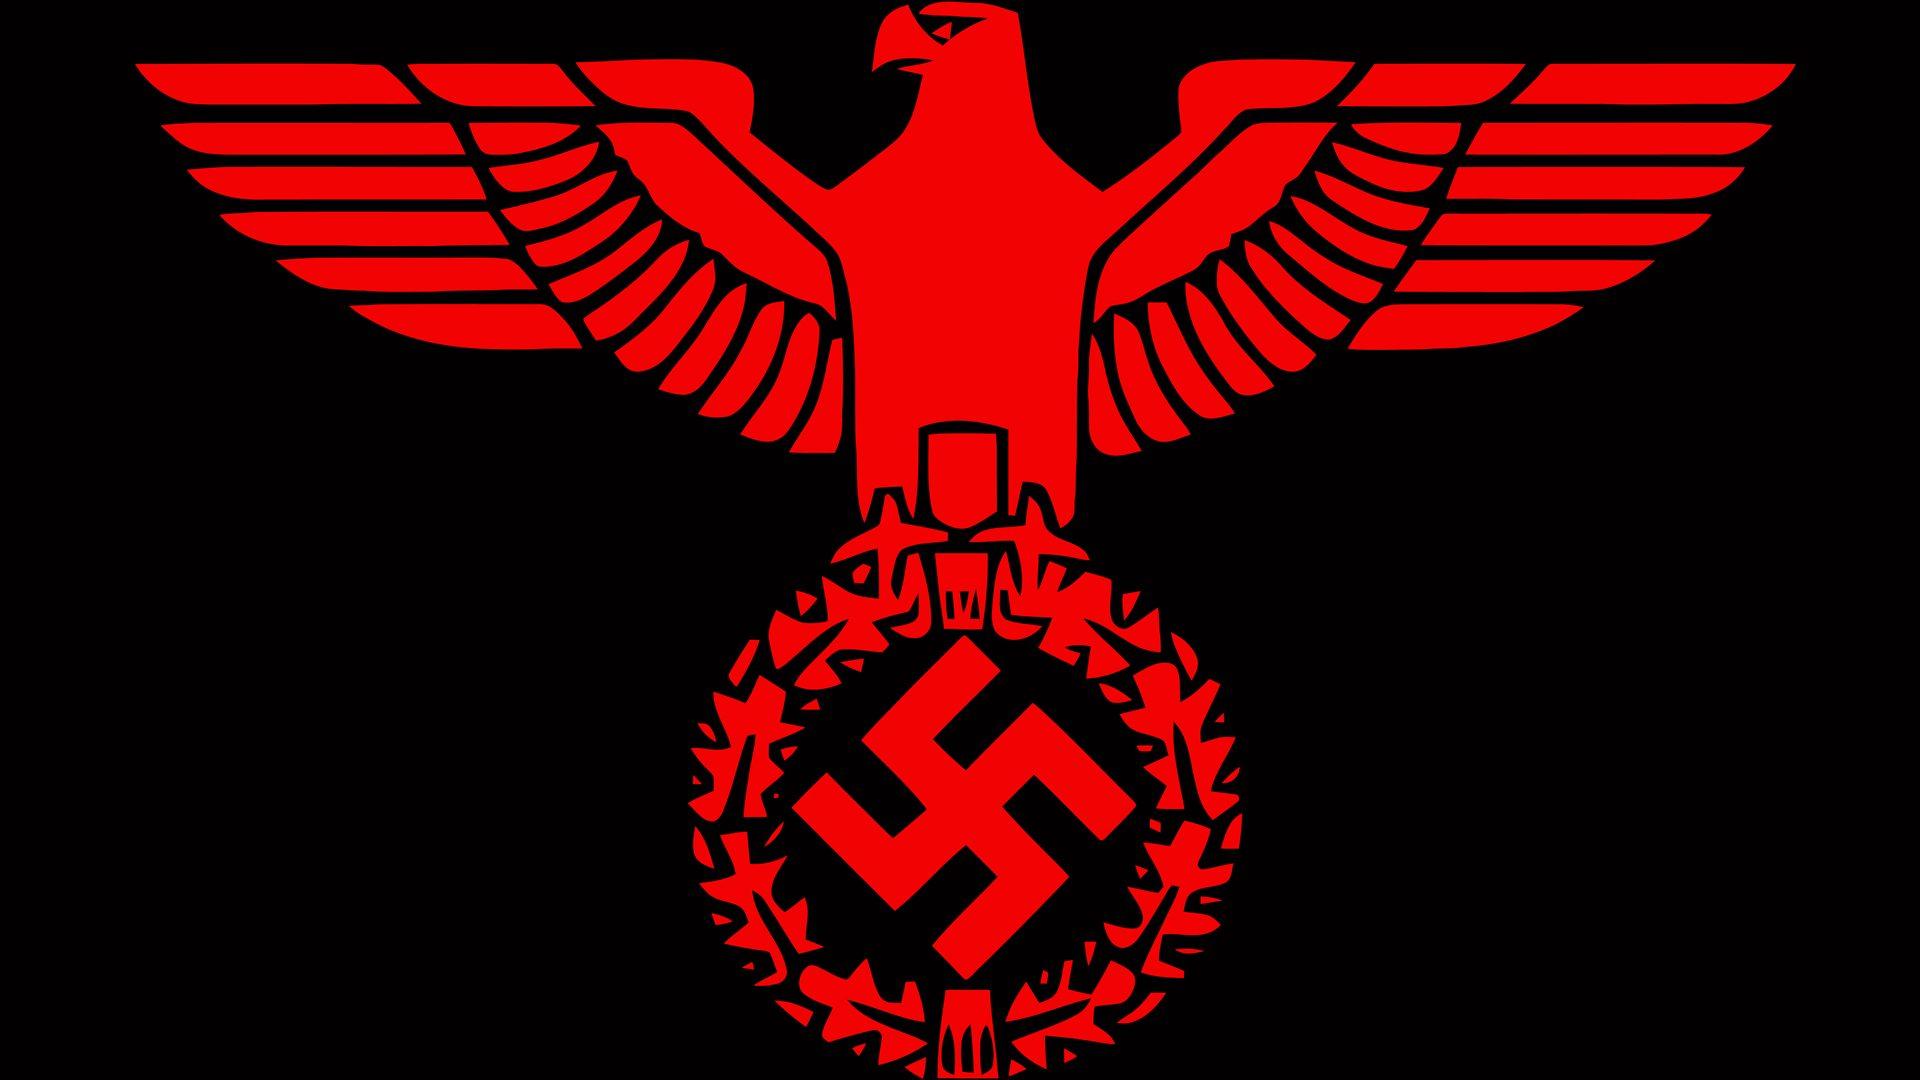 Natsi Logo - Black And Red Wallpaper Of The Nazi Party Emblem / Logo / Symbol